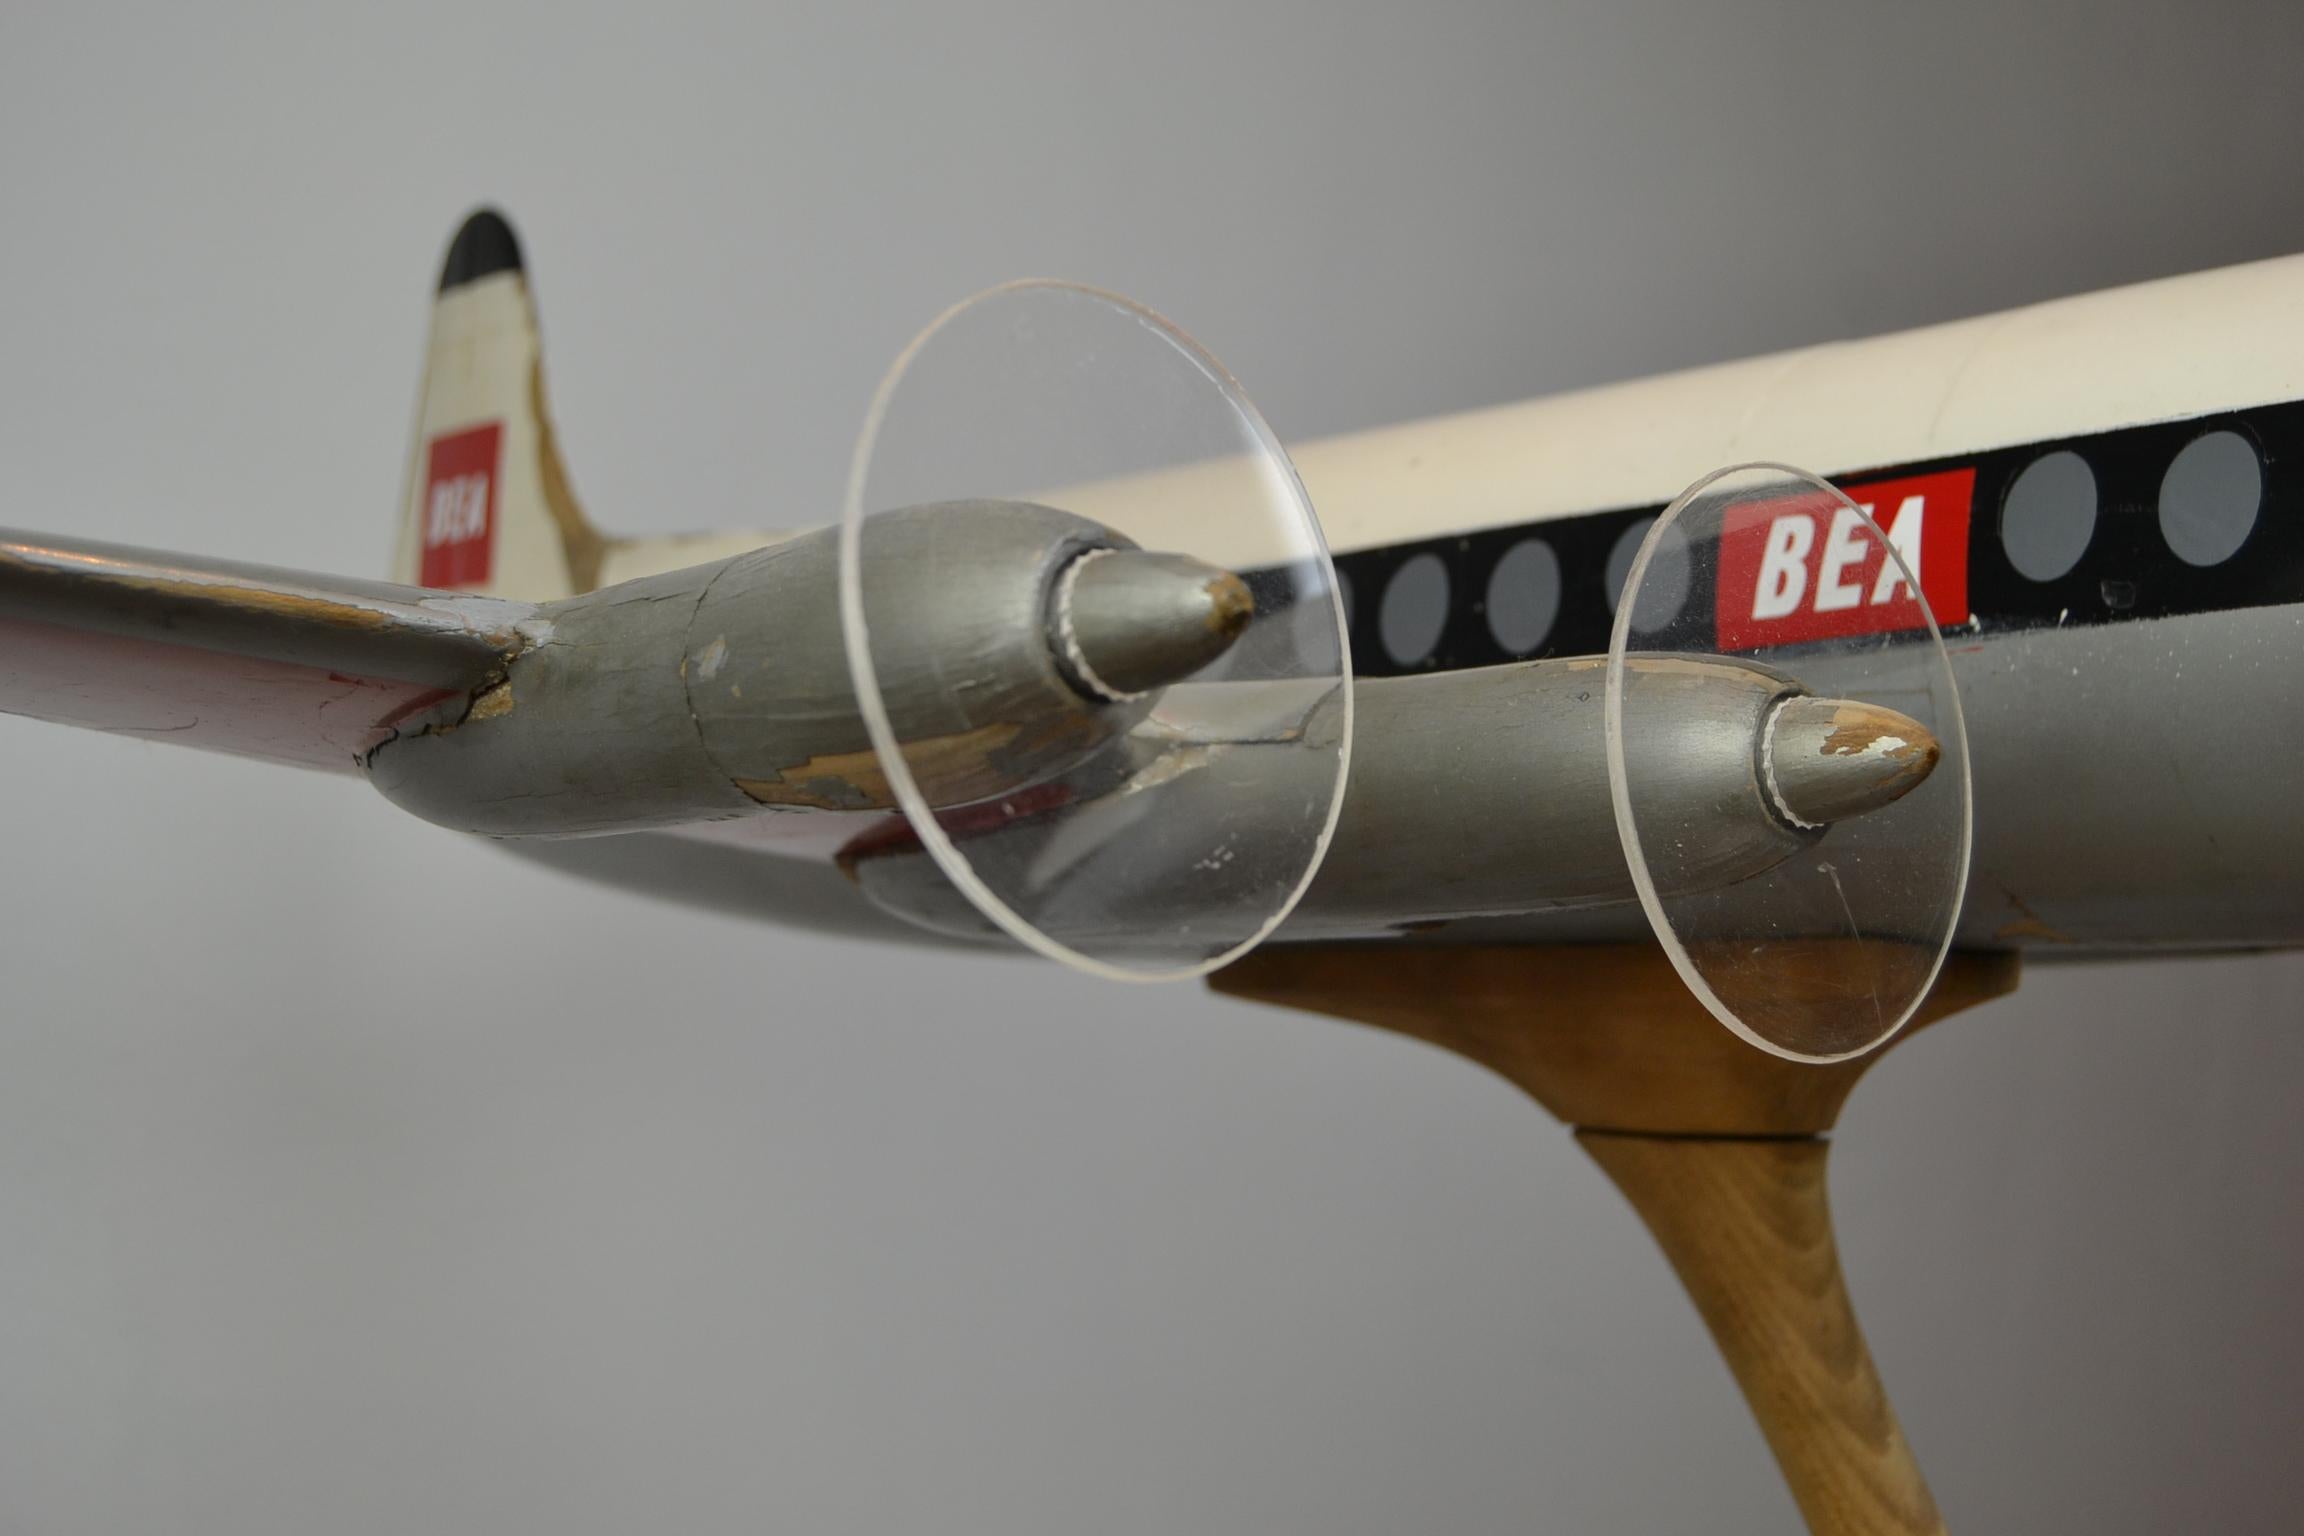 Vintage Large BEA Wooden Aeroplane Display, British European Airways, 1950s 10